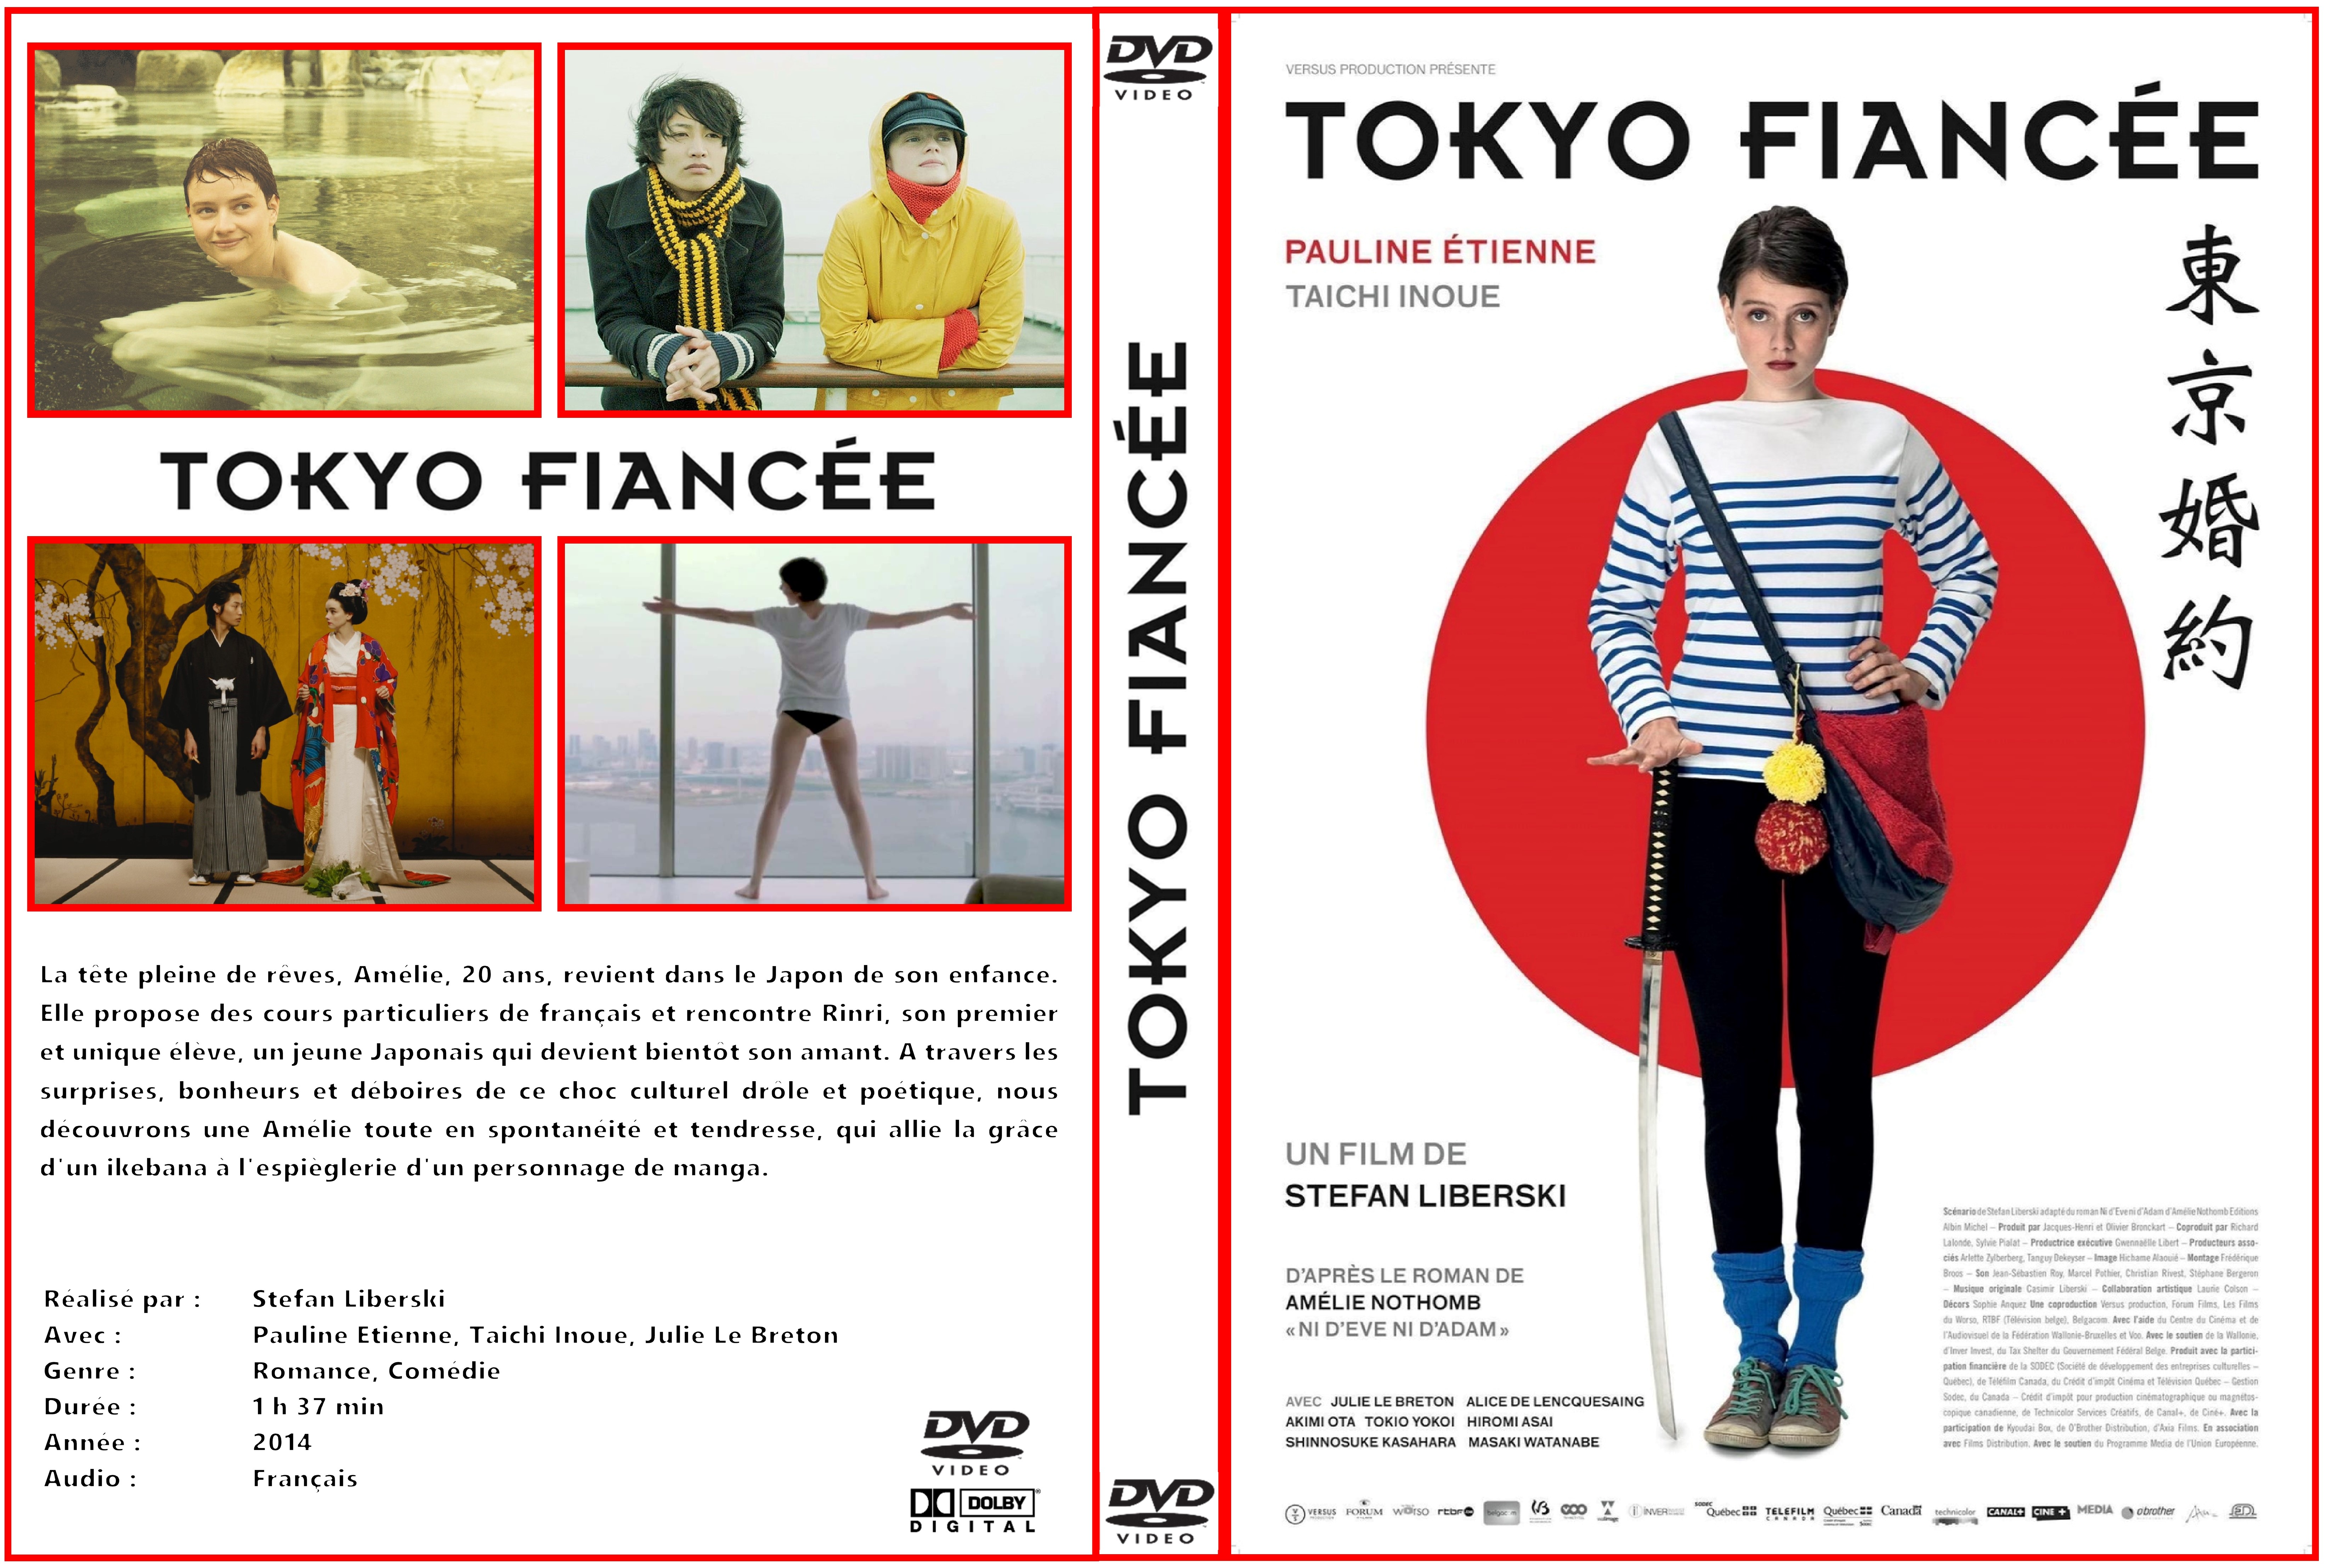 Jaquette DVD Tokyo Fiance custom